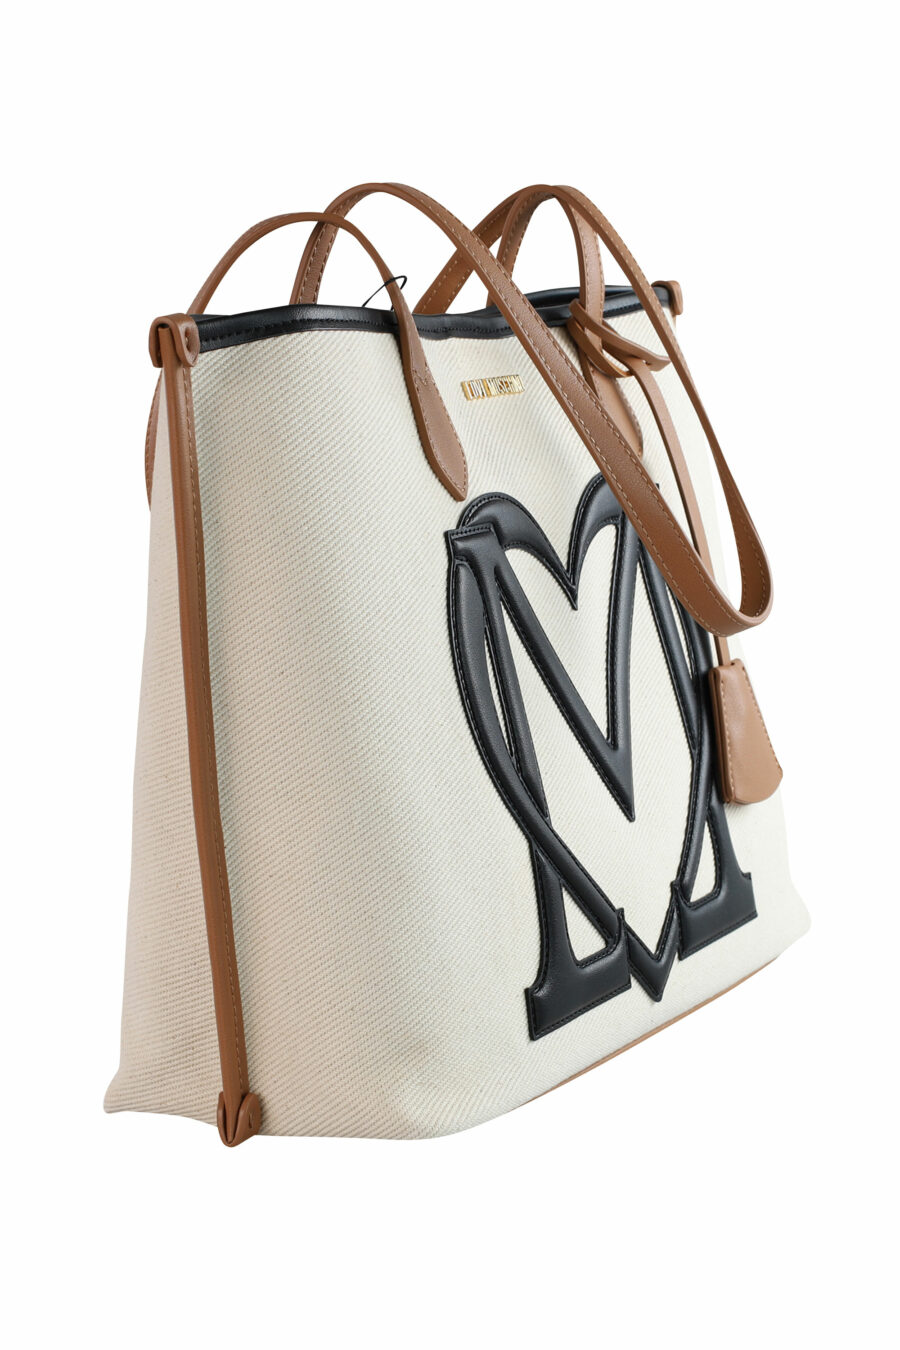 White shopper bag with black heart maxilogo - IMG 3676